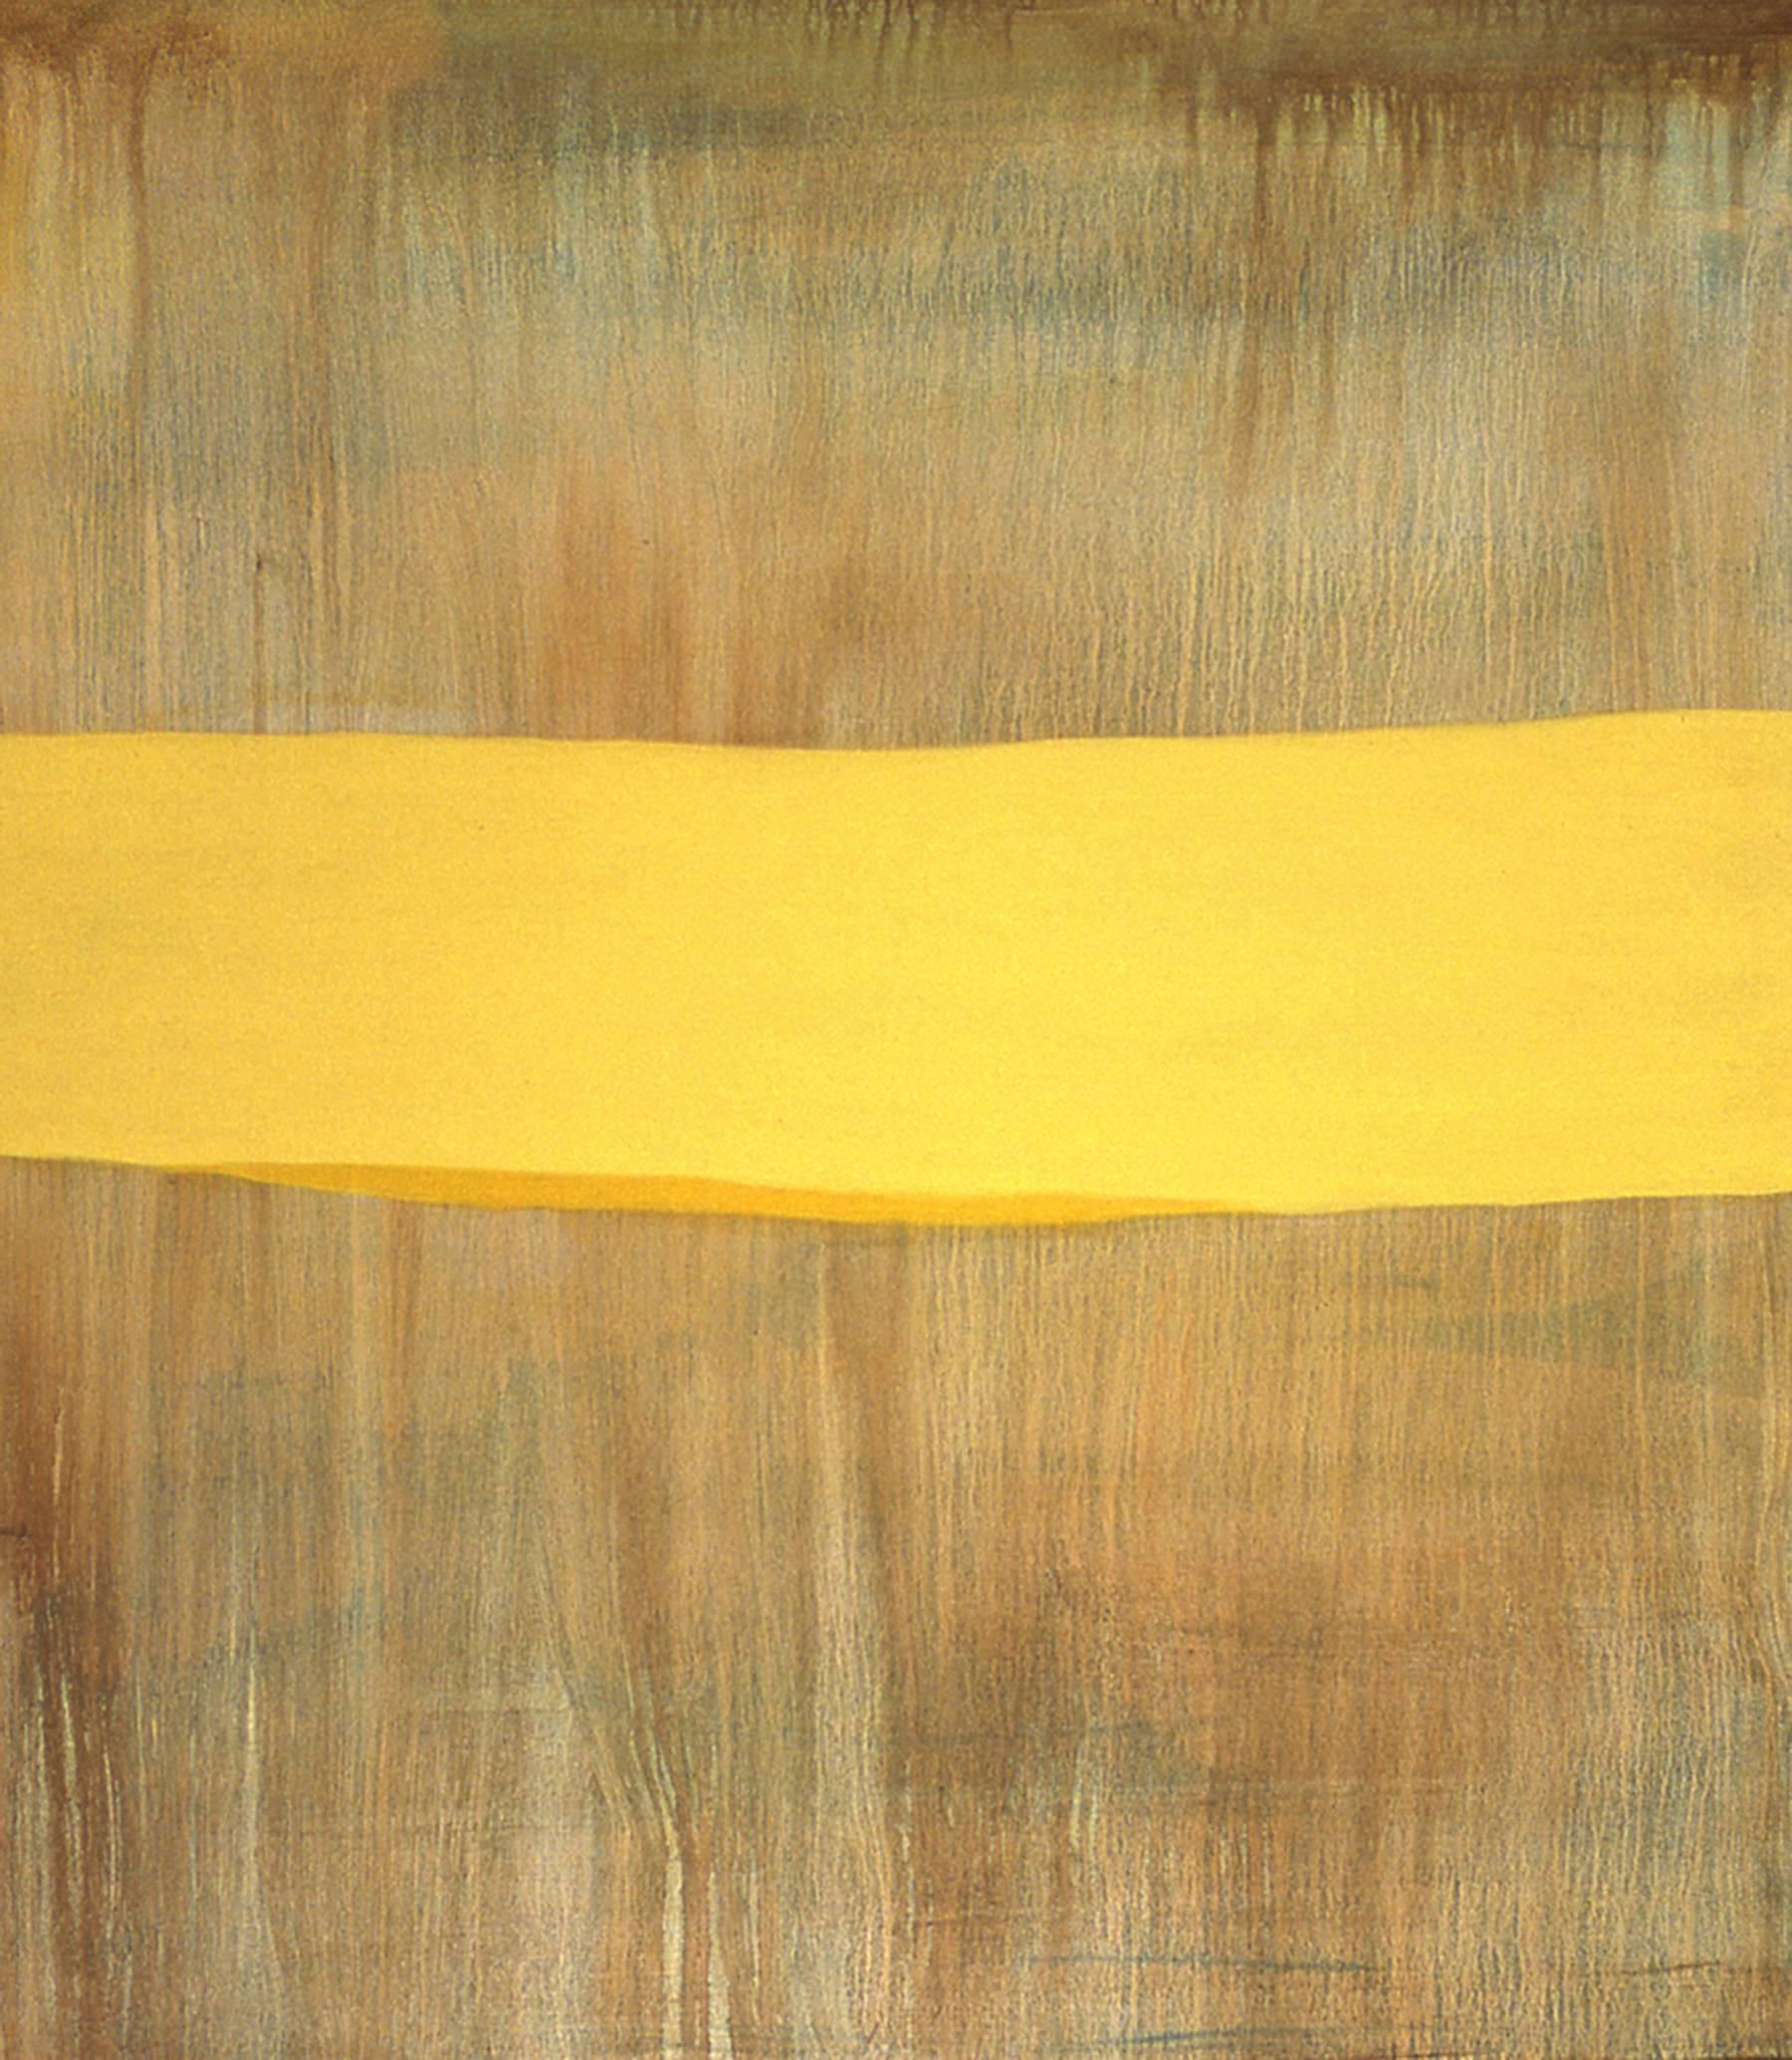 Anastasia Pelias Abstract Painting - Linked (yellow bar)